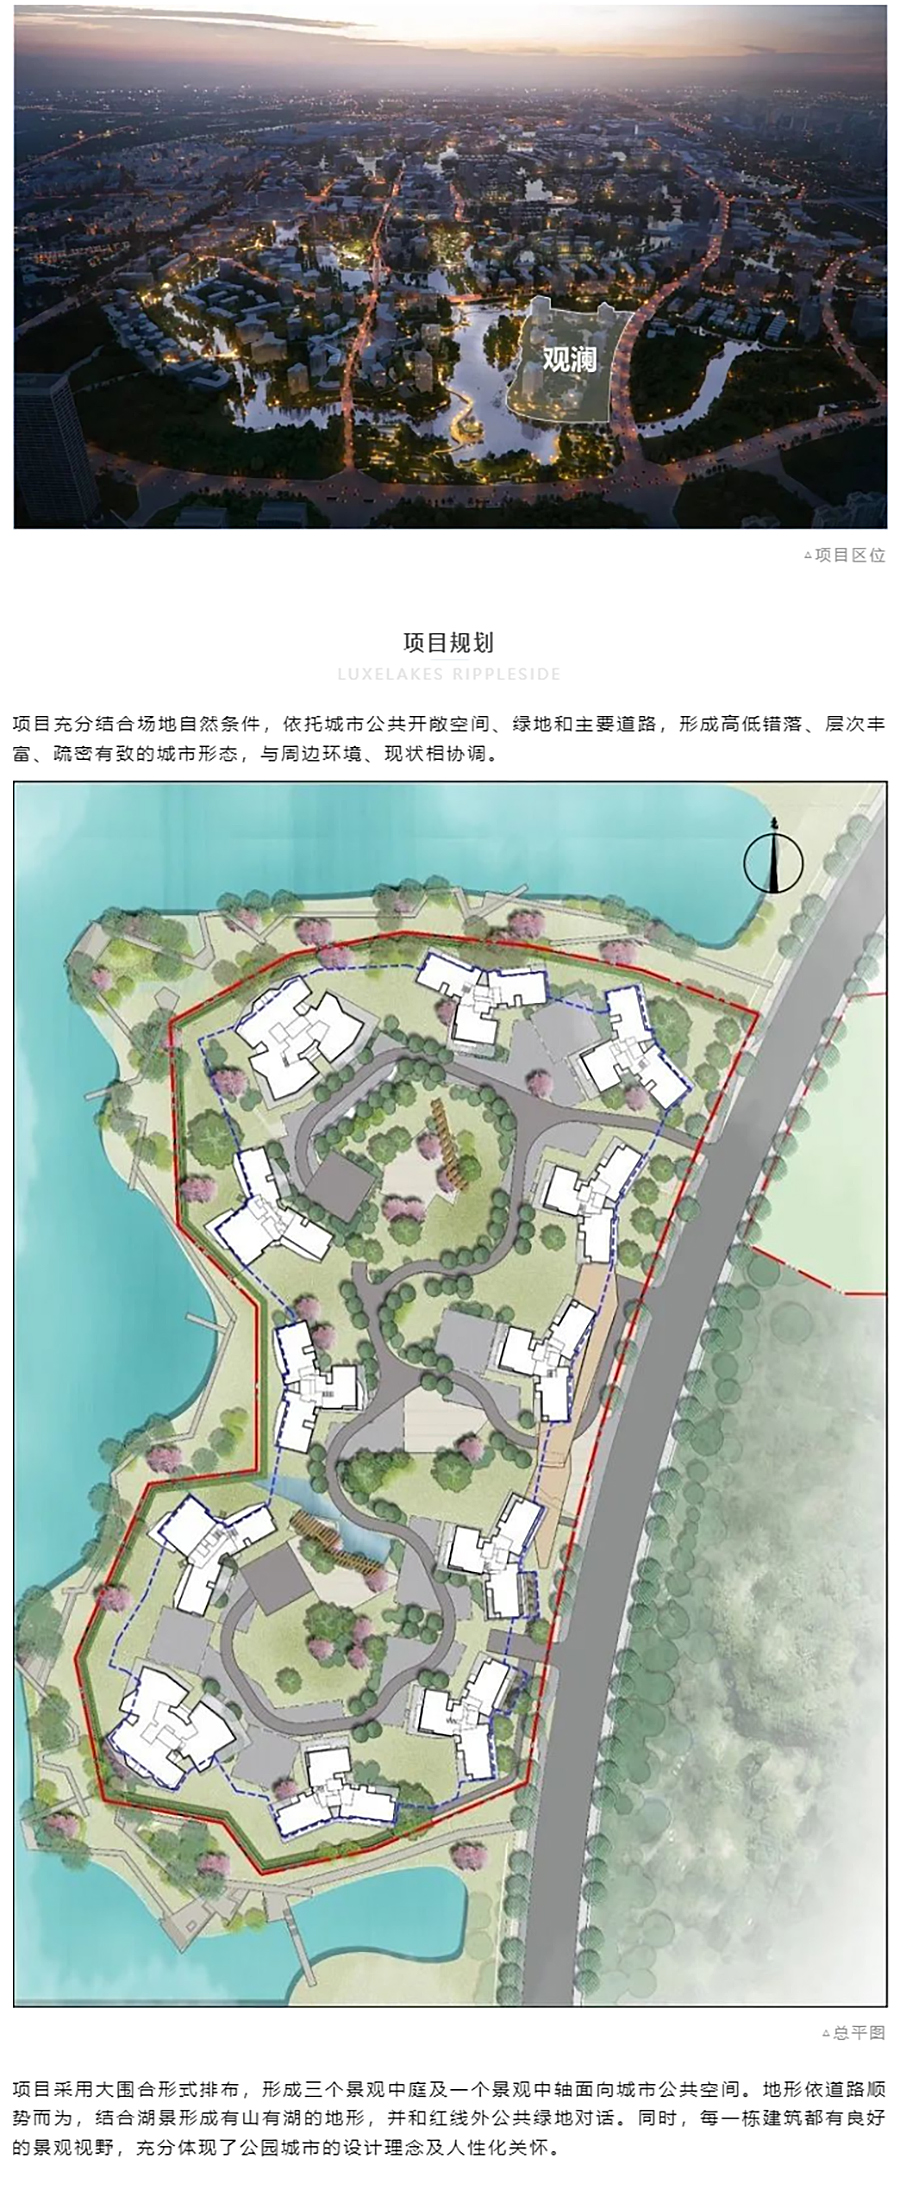 【2022REARD获奖作品赏析】HUAXI-DESIGN-筑作-_-充满未来感的湖岸居所——麓湖生_0001_图层-2.jpg